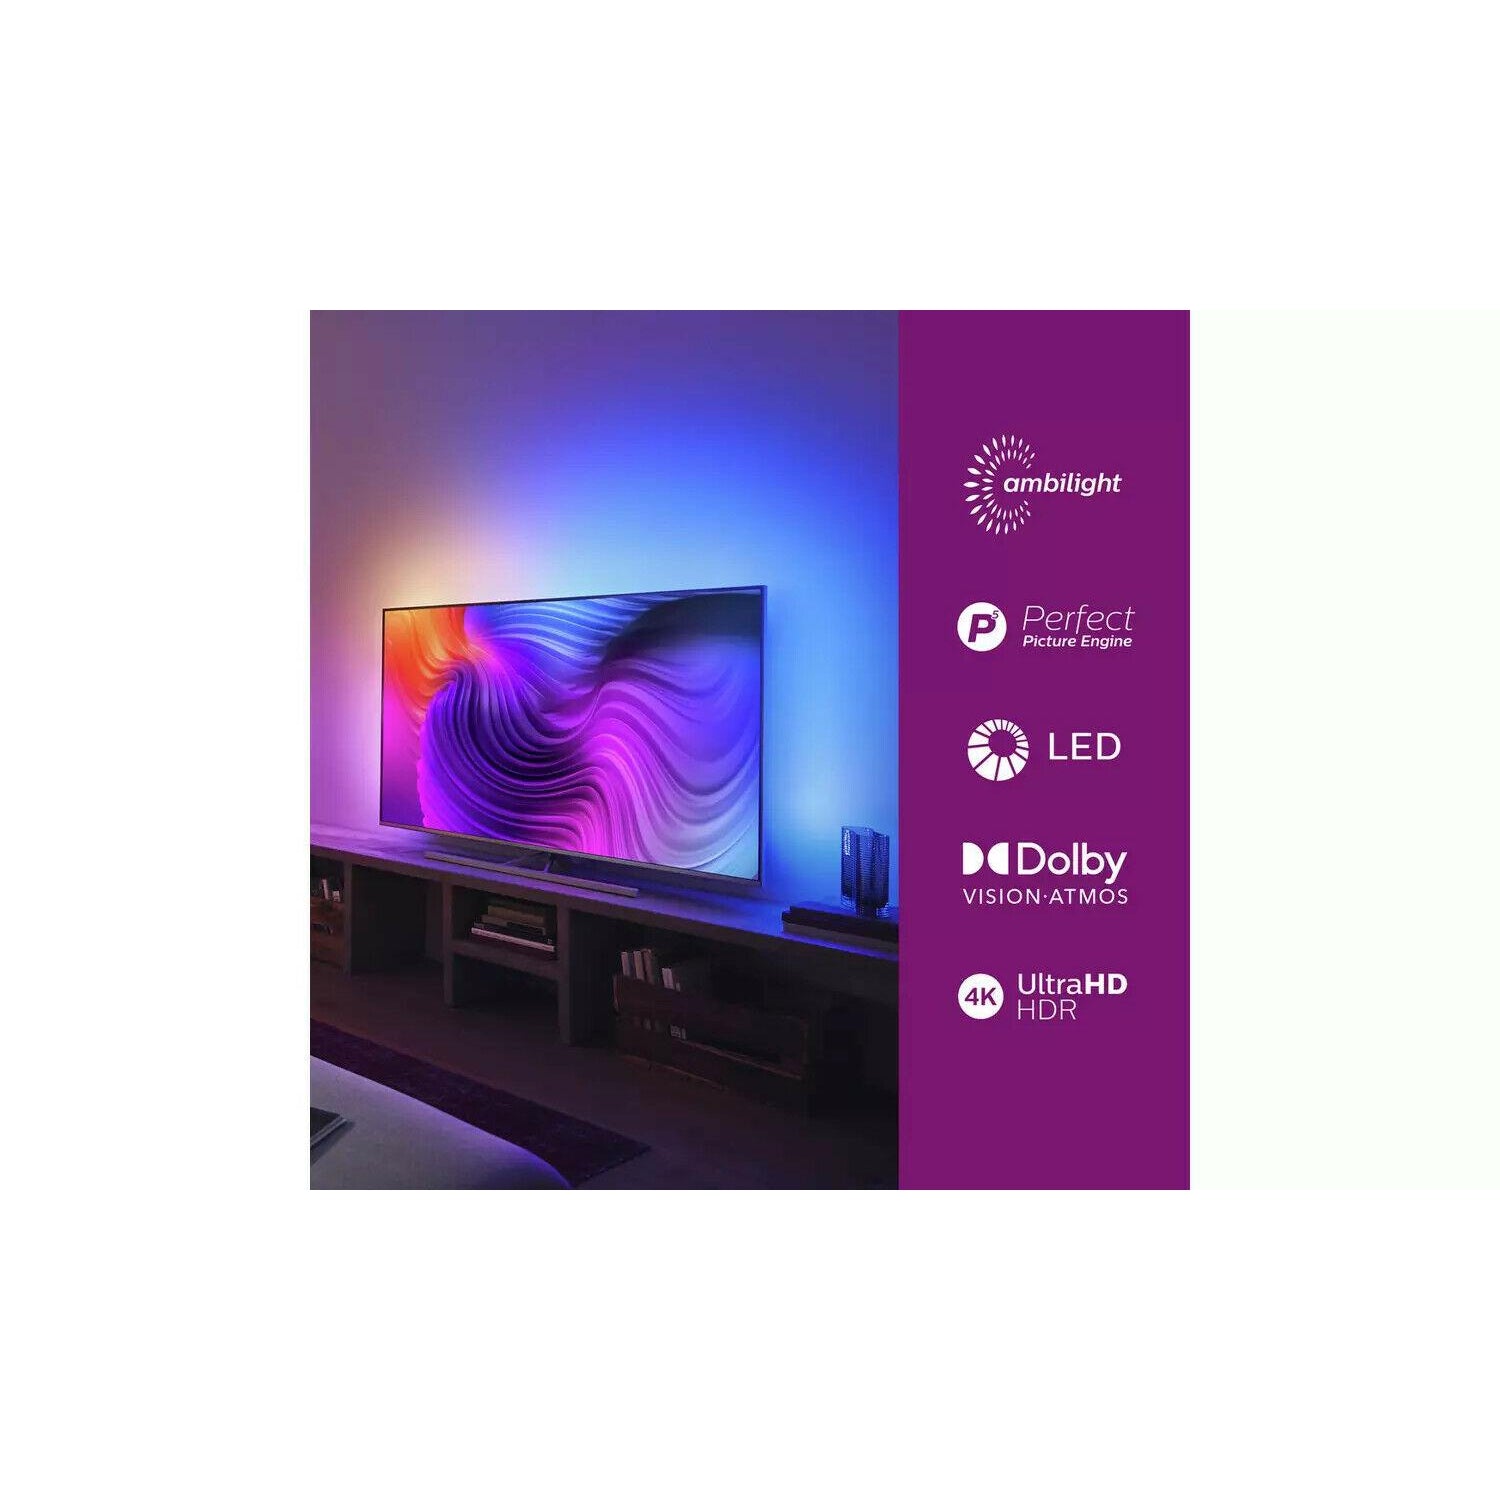 Philips Ambilight 43 Inch 4K UHD Smart TV - 43PUS8536 - Refurbished Pristine